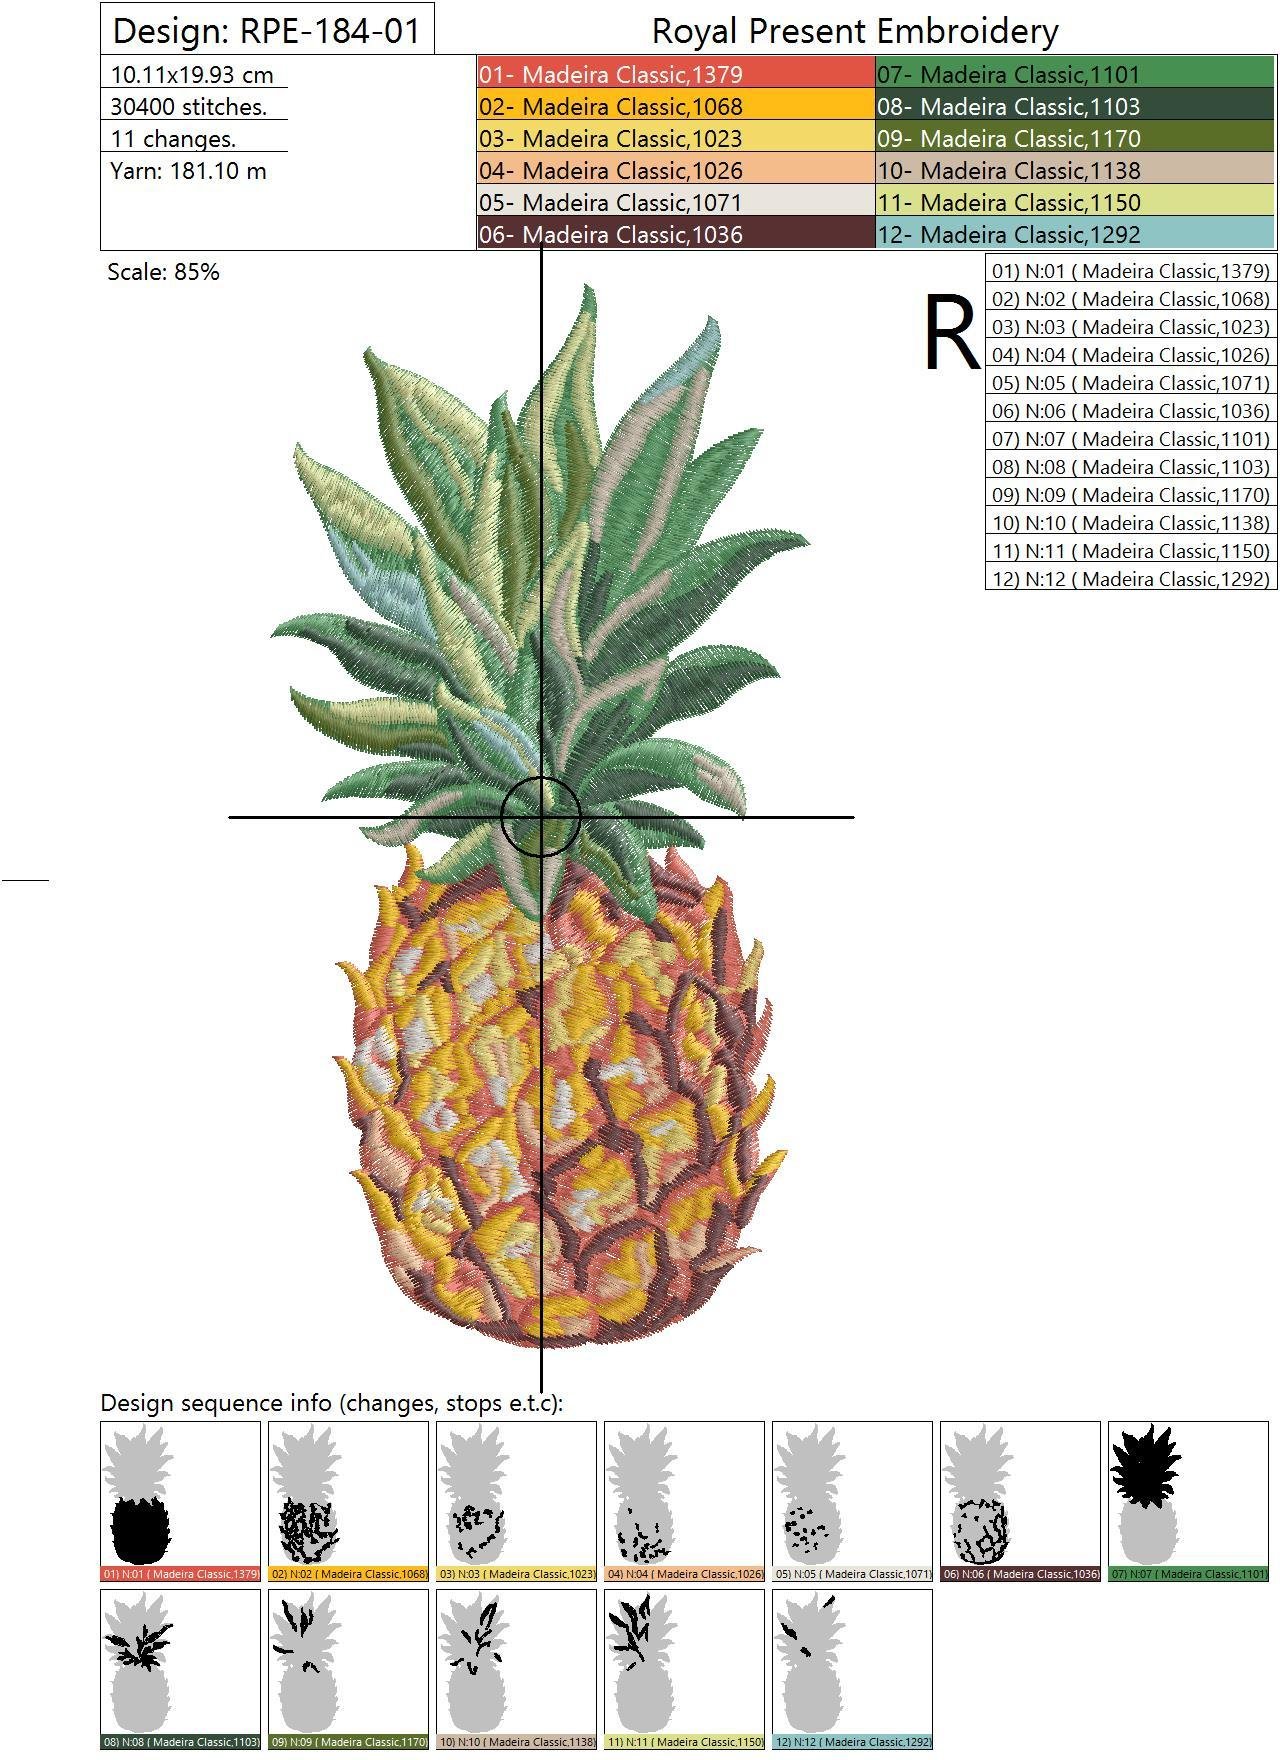 Fruit Ninja Pineapple machine embroidery design fill stitch -  Portugal